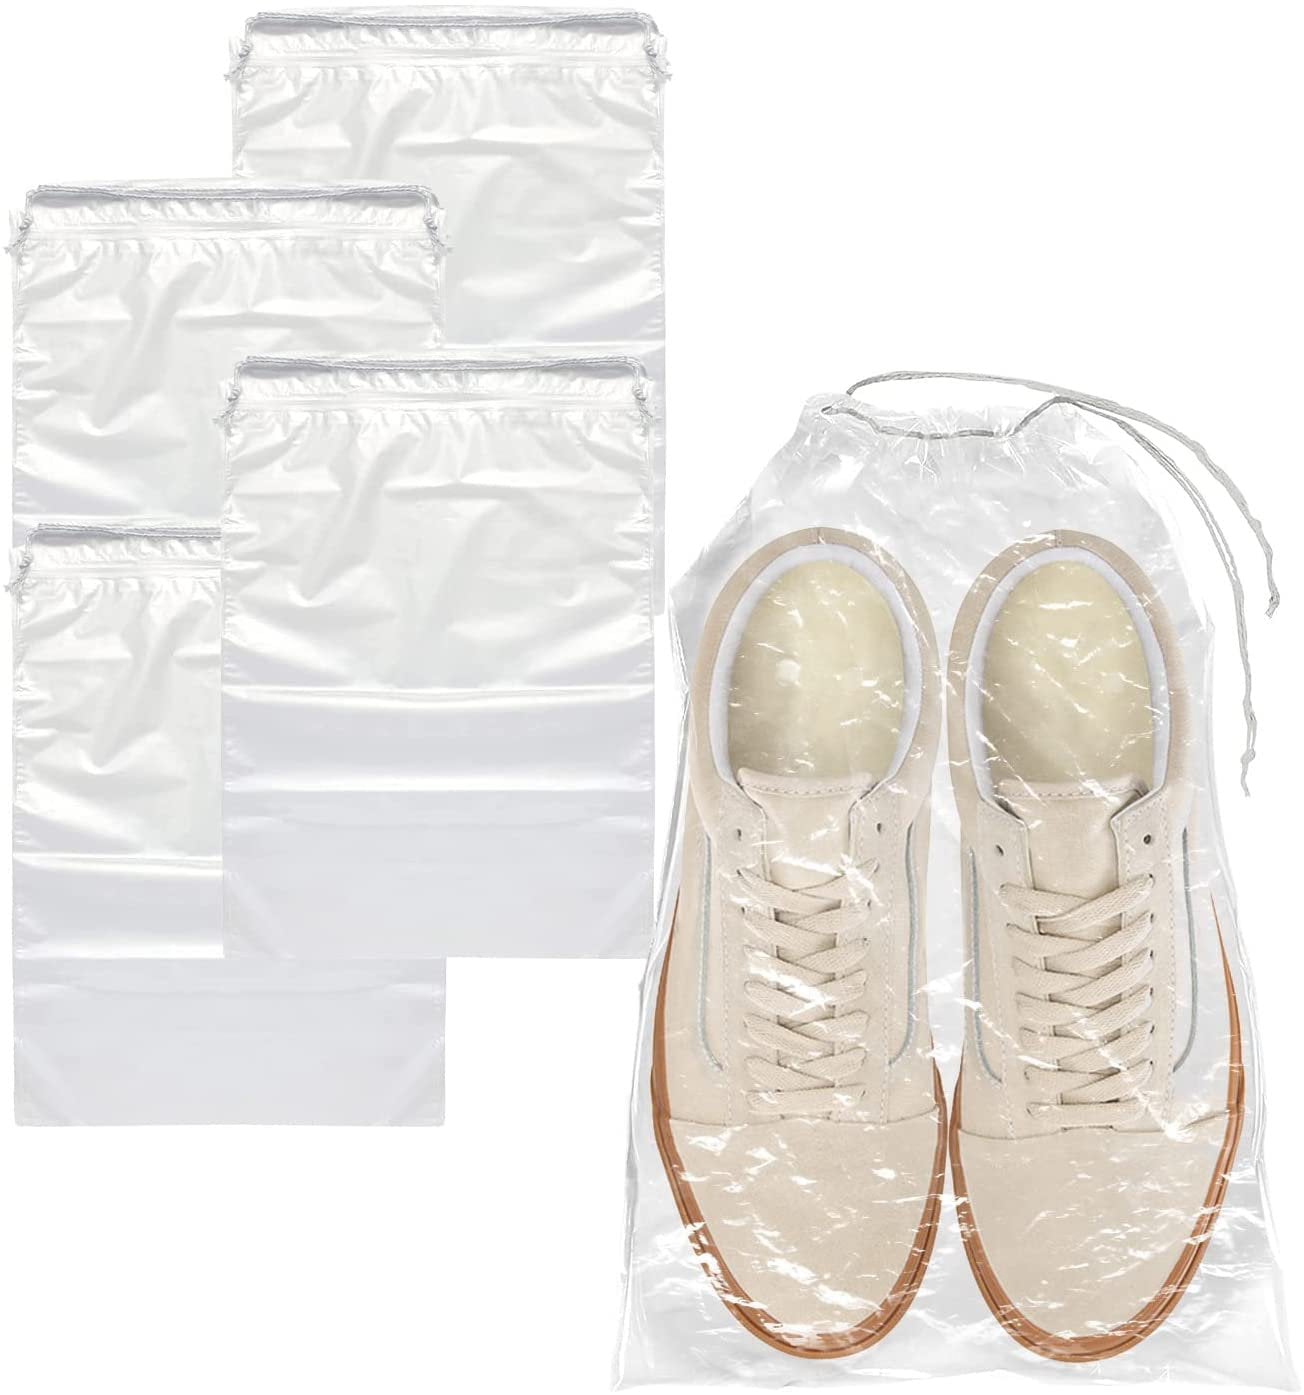 10x Portable Travel Shoe Bag View Window Pouch Storage Waterproof Drawstring Bag 